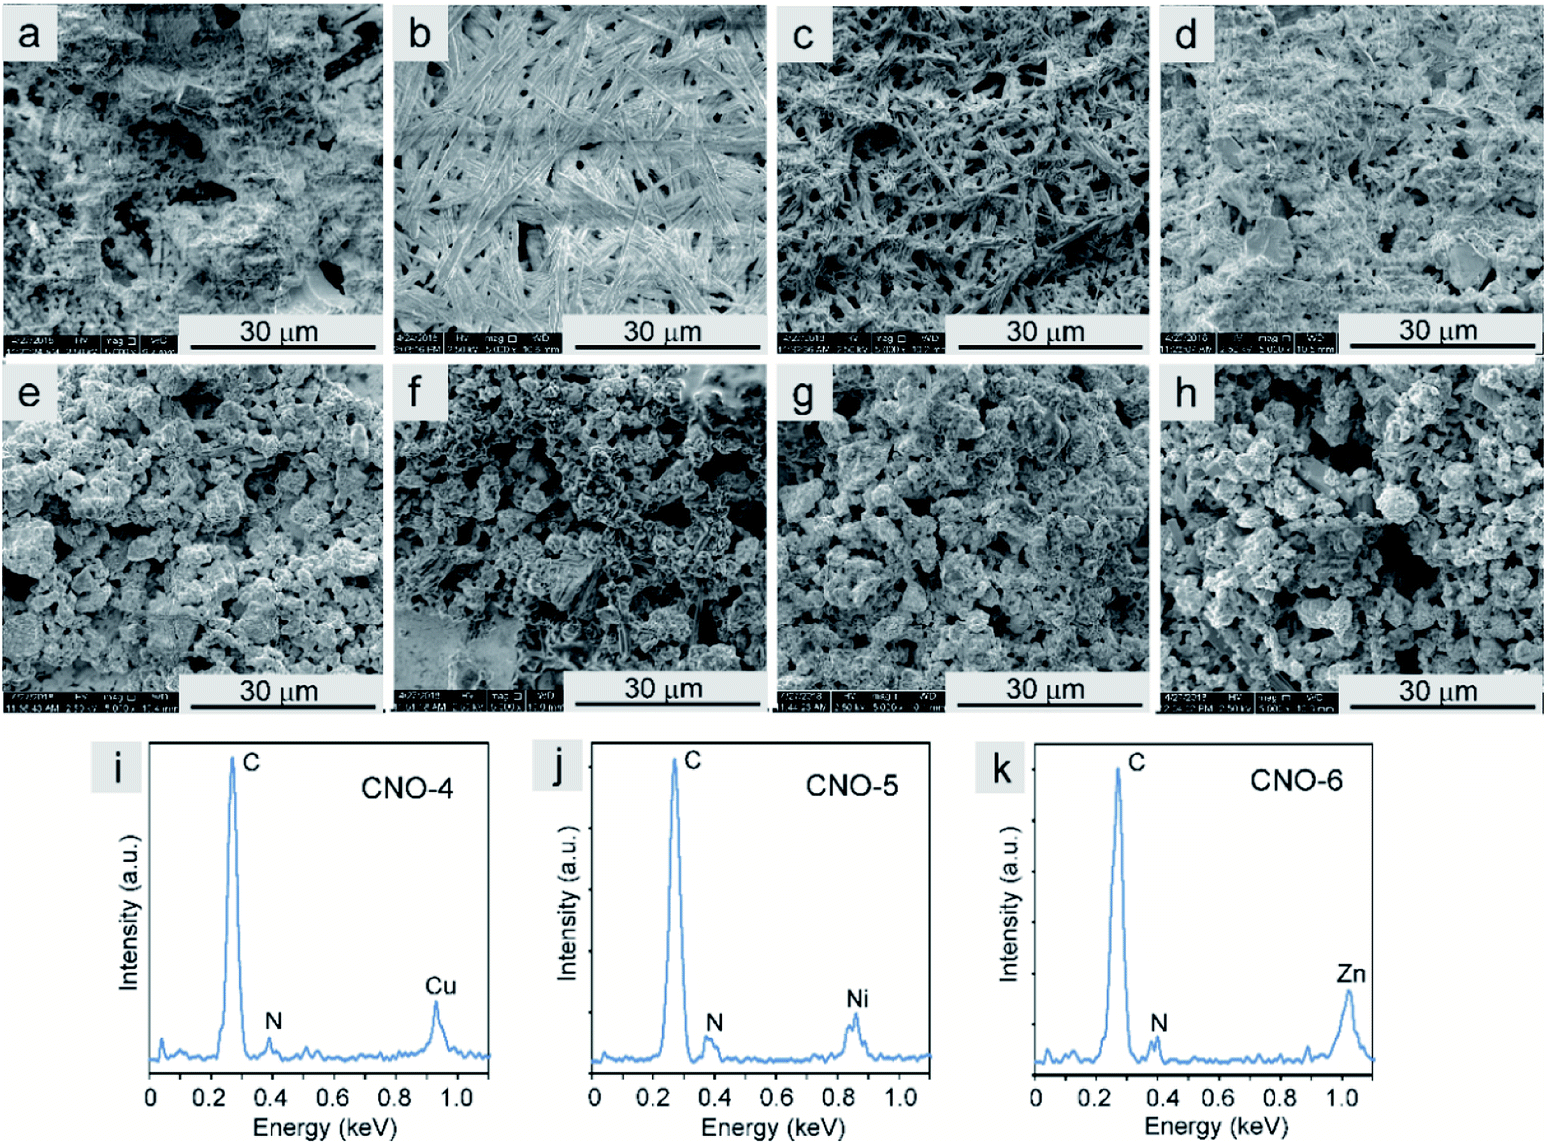 Nanostructural Catalyst Metallophthalocyanine And Carbon Nano Onion With Enhanced Visible Light Photocatalytic Activity Towards Organic Pollutants Rsc Advances Rsc Publishing Doi 10 1039 D0ra006f